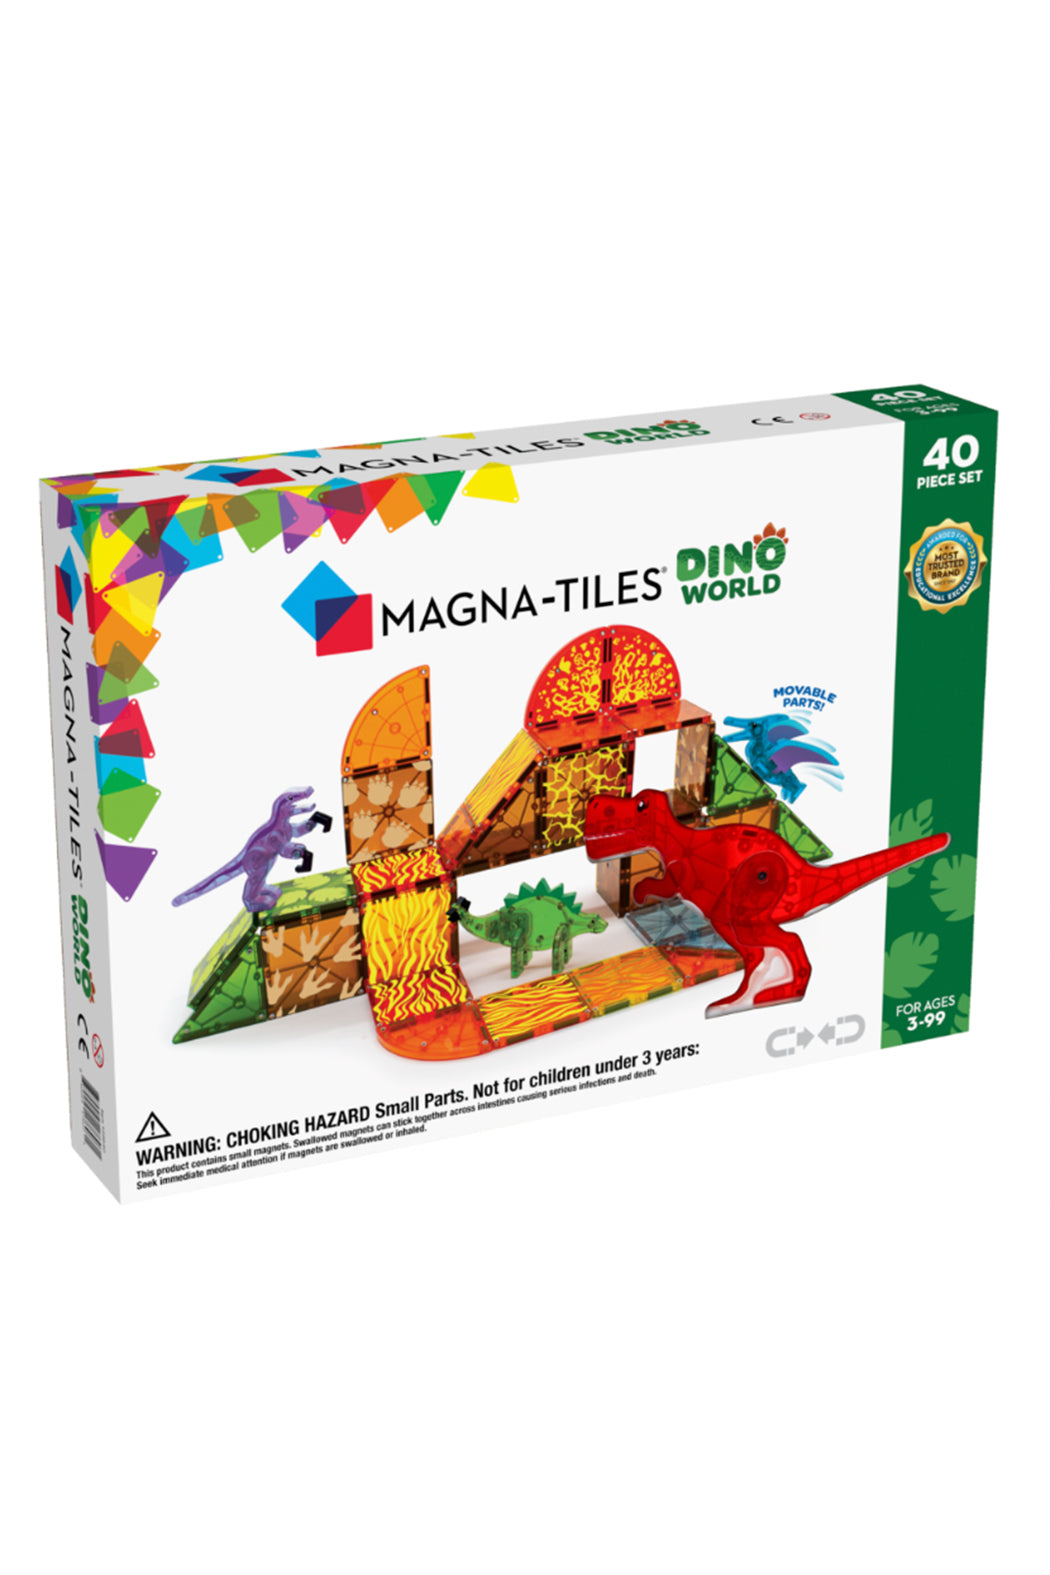 Valtech Magna-Tiles Dino World 40-Piece Set